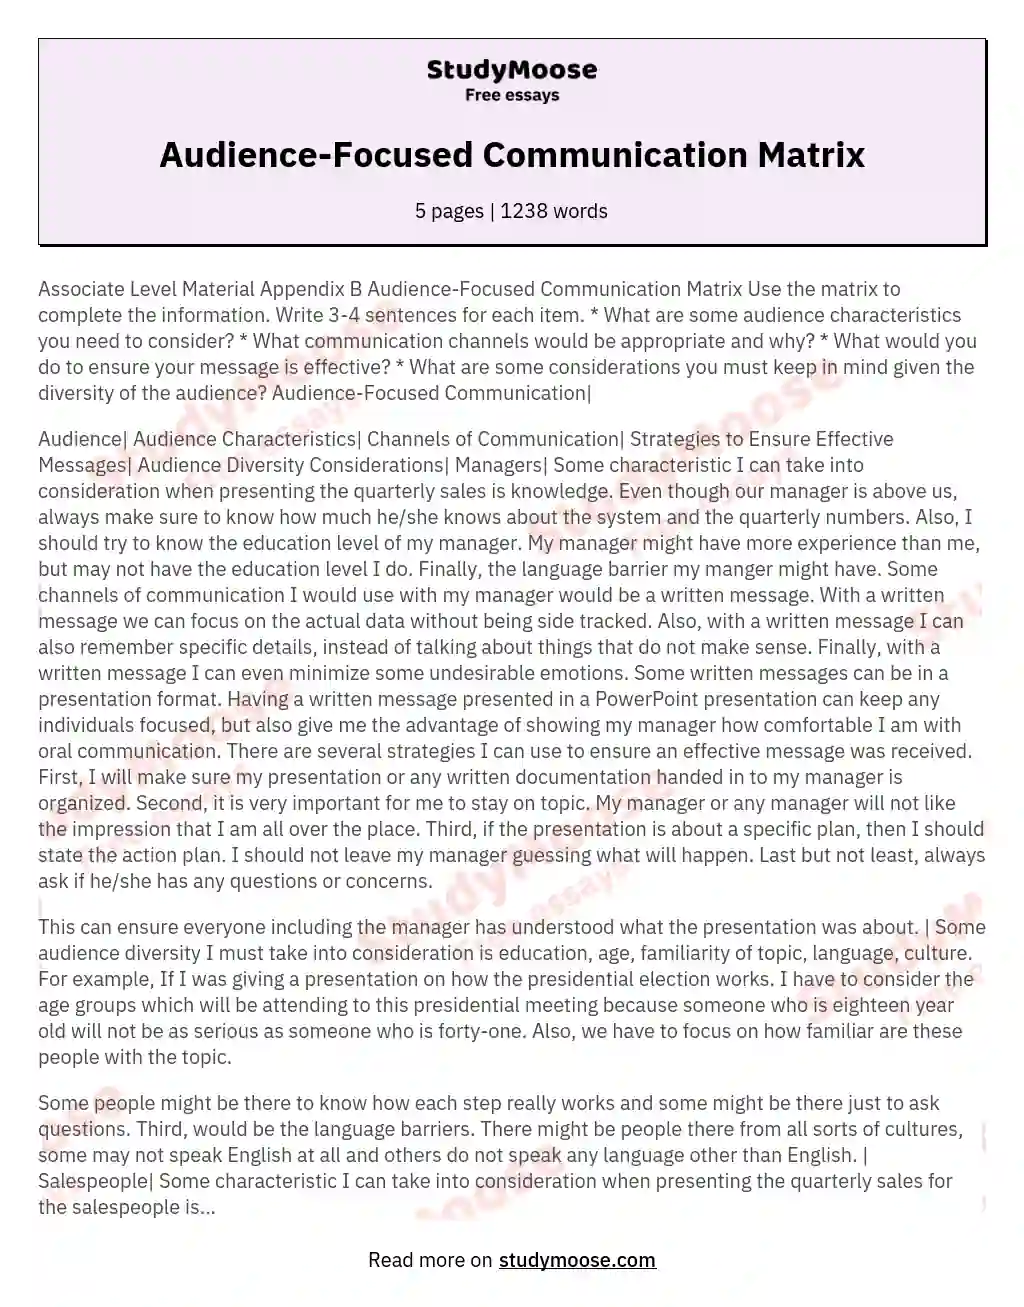 Audience-Focused Communication Matrix essay